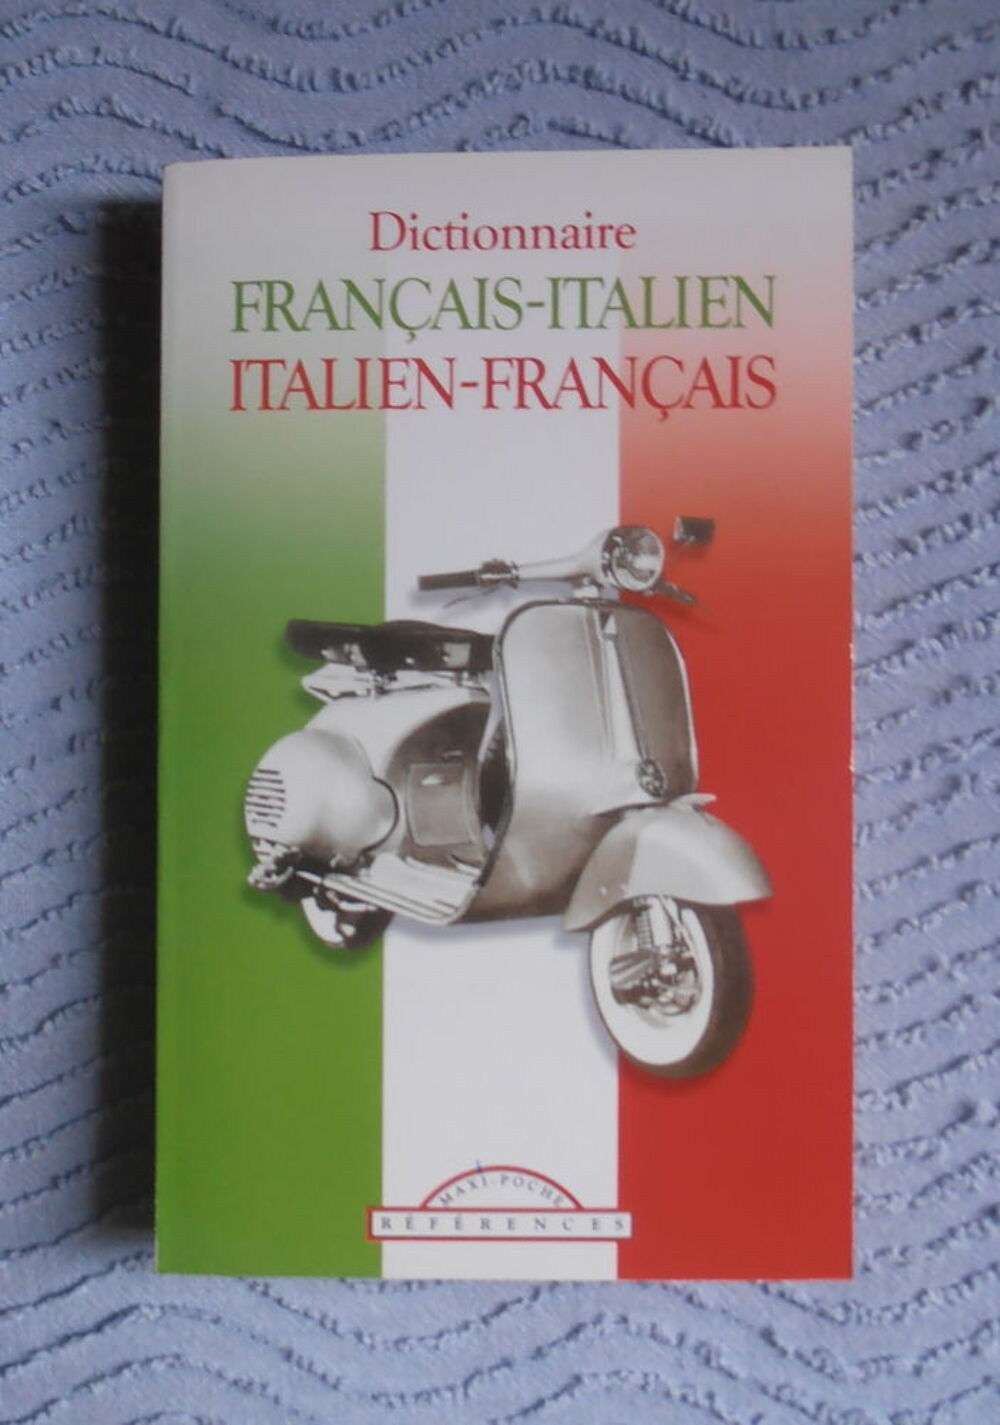 Dictionnaire Fran&ccedil;ais-Italien Italien-Fran&ccedil;ais
Livres et BD